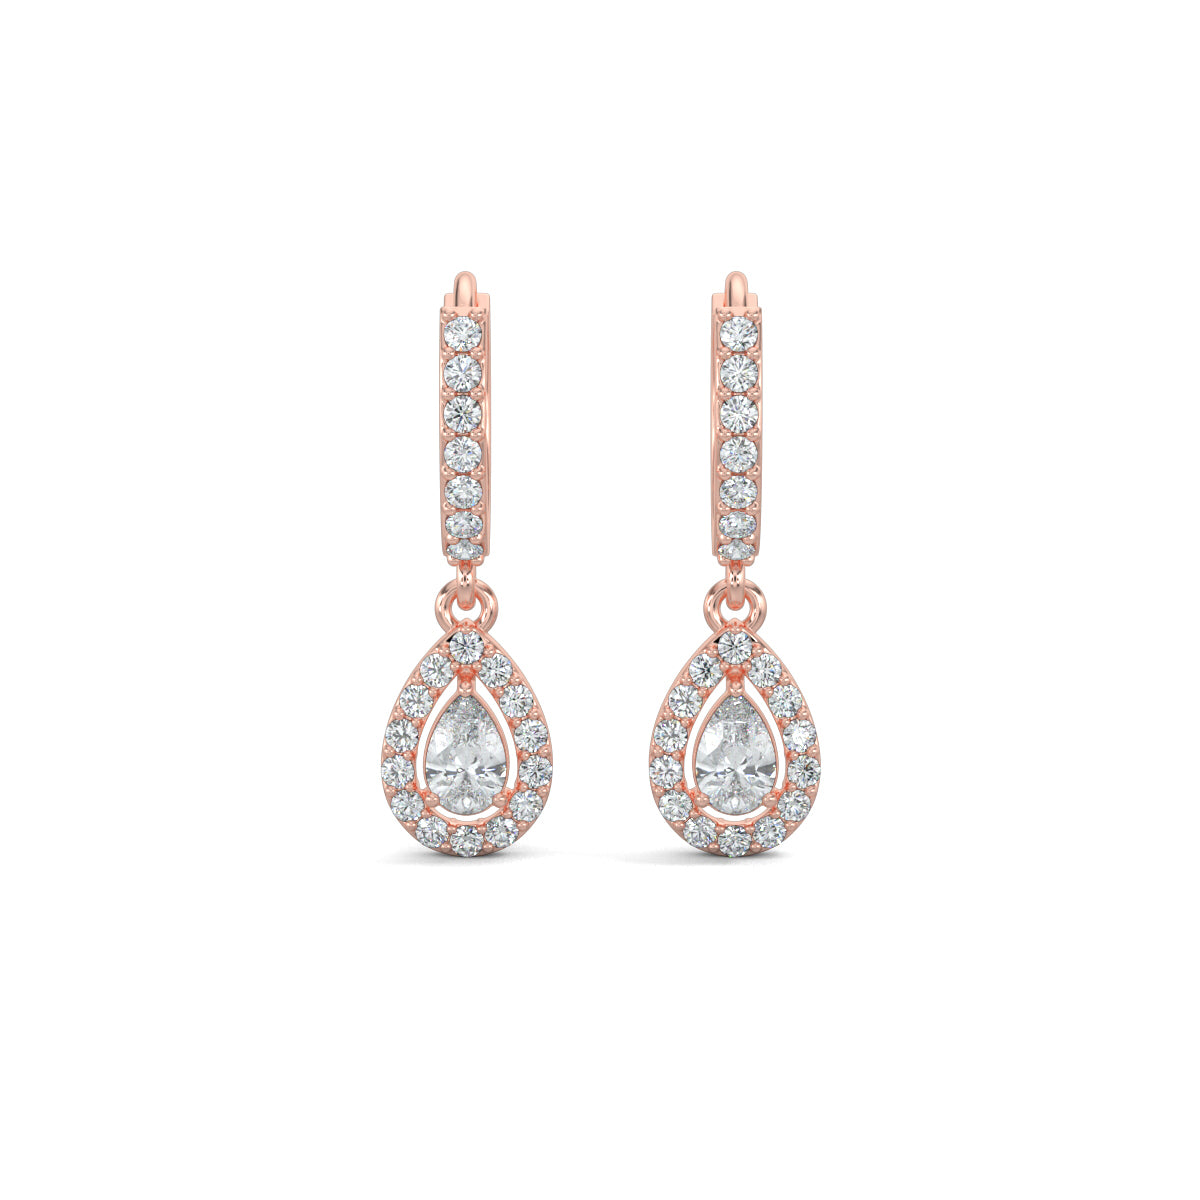 Rose Gold, Natural diamond dangler earrings, Lab-grown diamond dangler earrings, pave setting, round diamonds, pear diamond, halo setting, modern jewelry, elegant earrings.